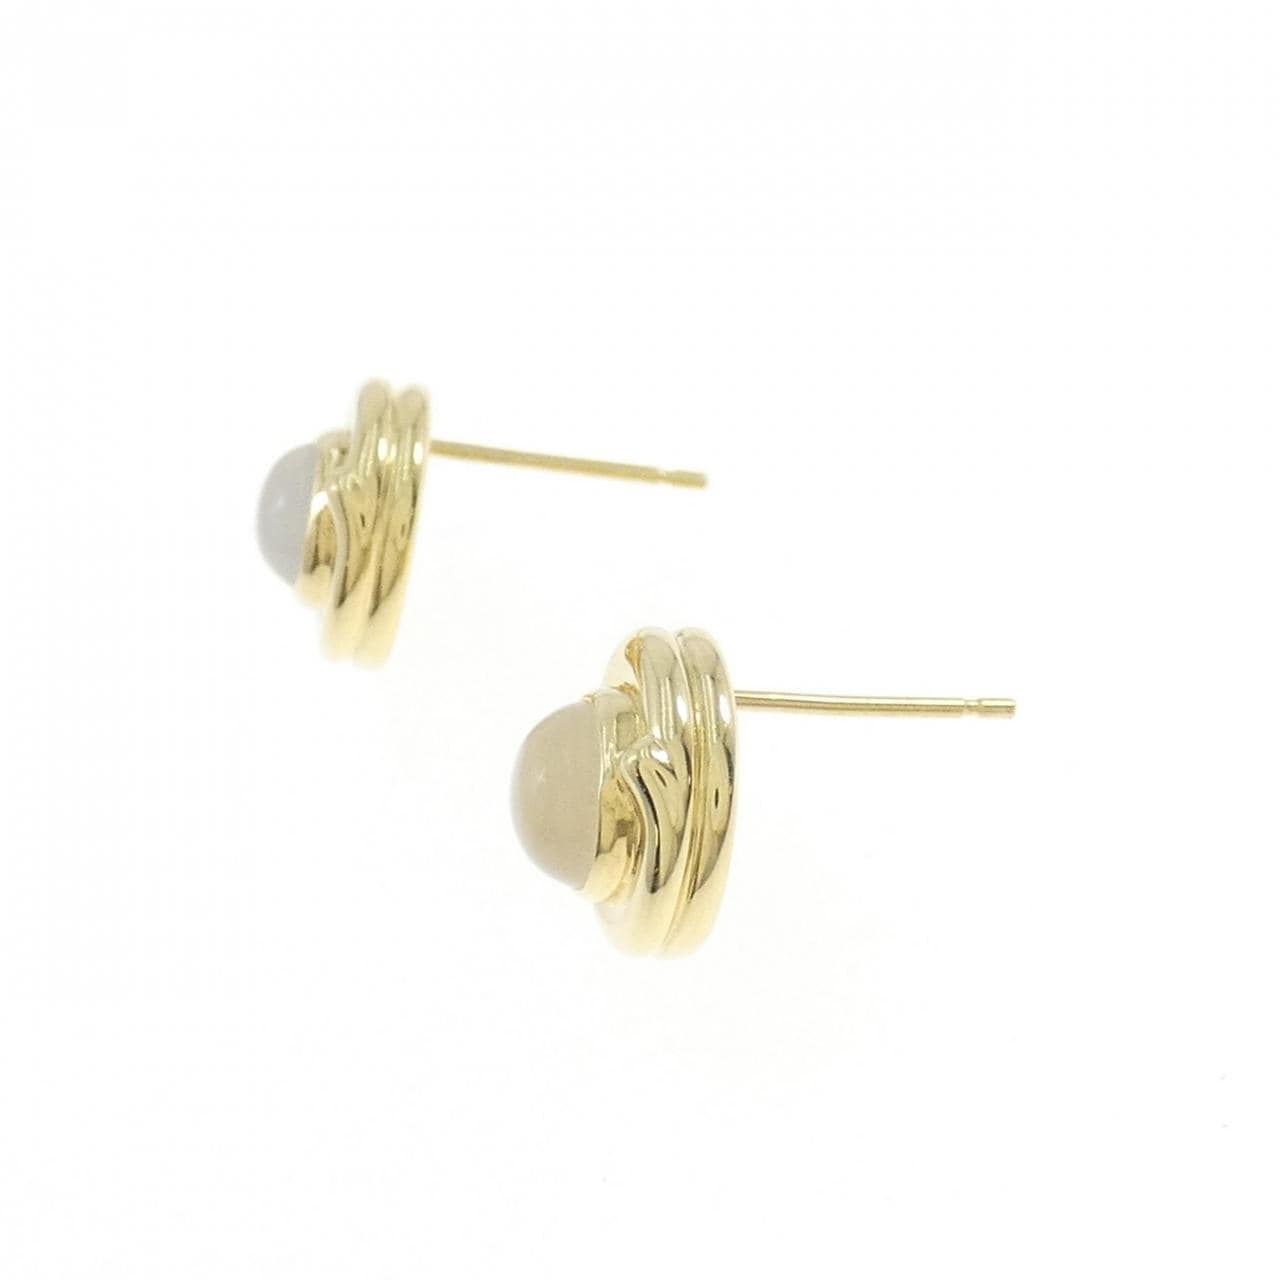 K18YG Moonstone earrings